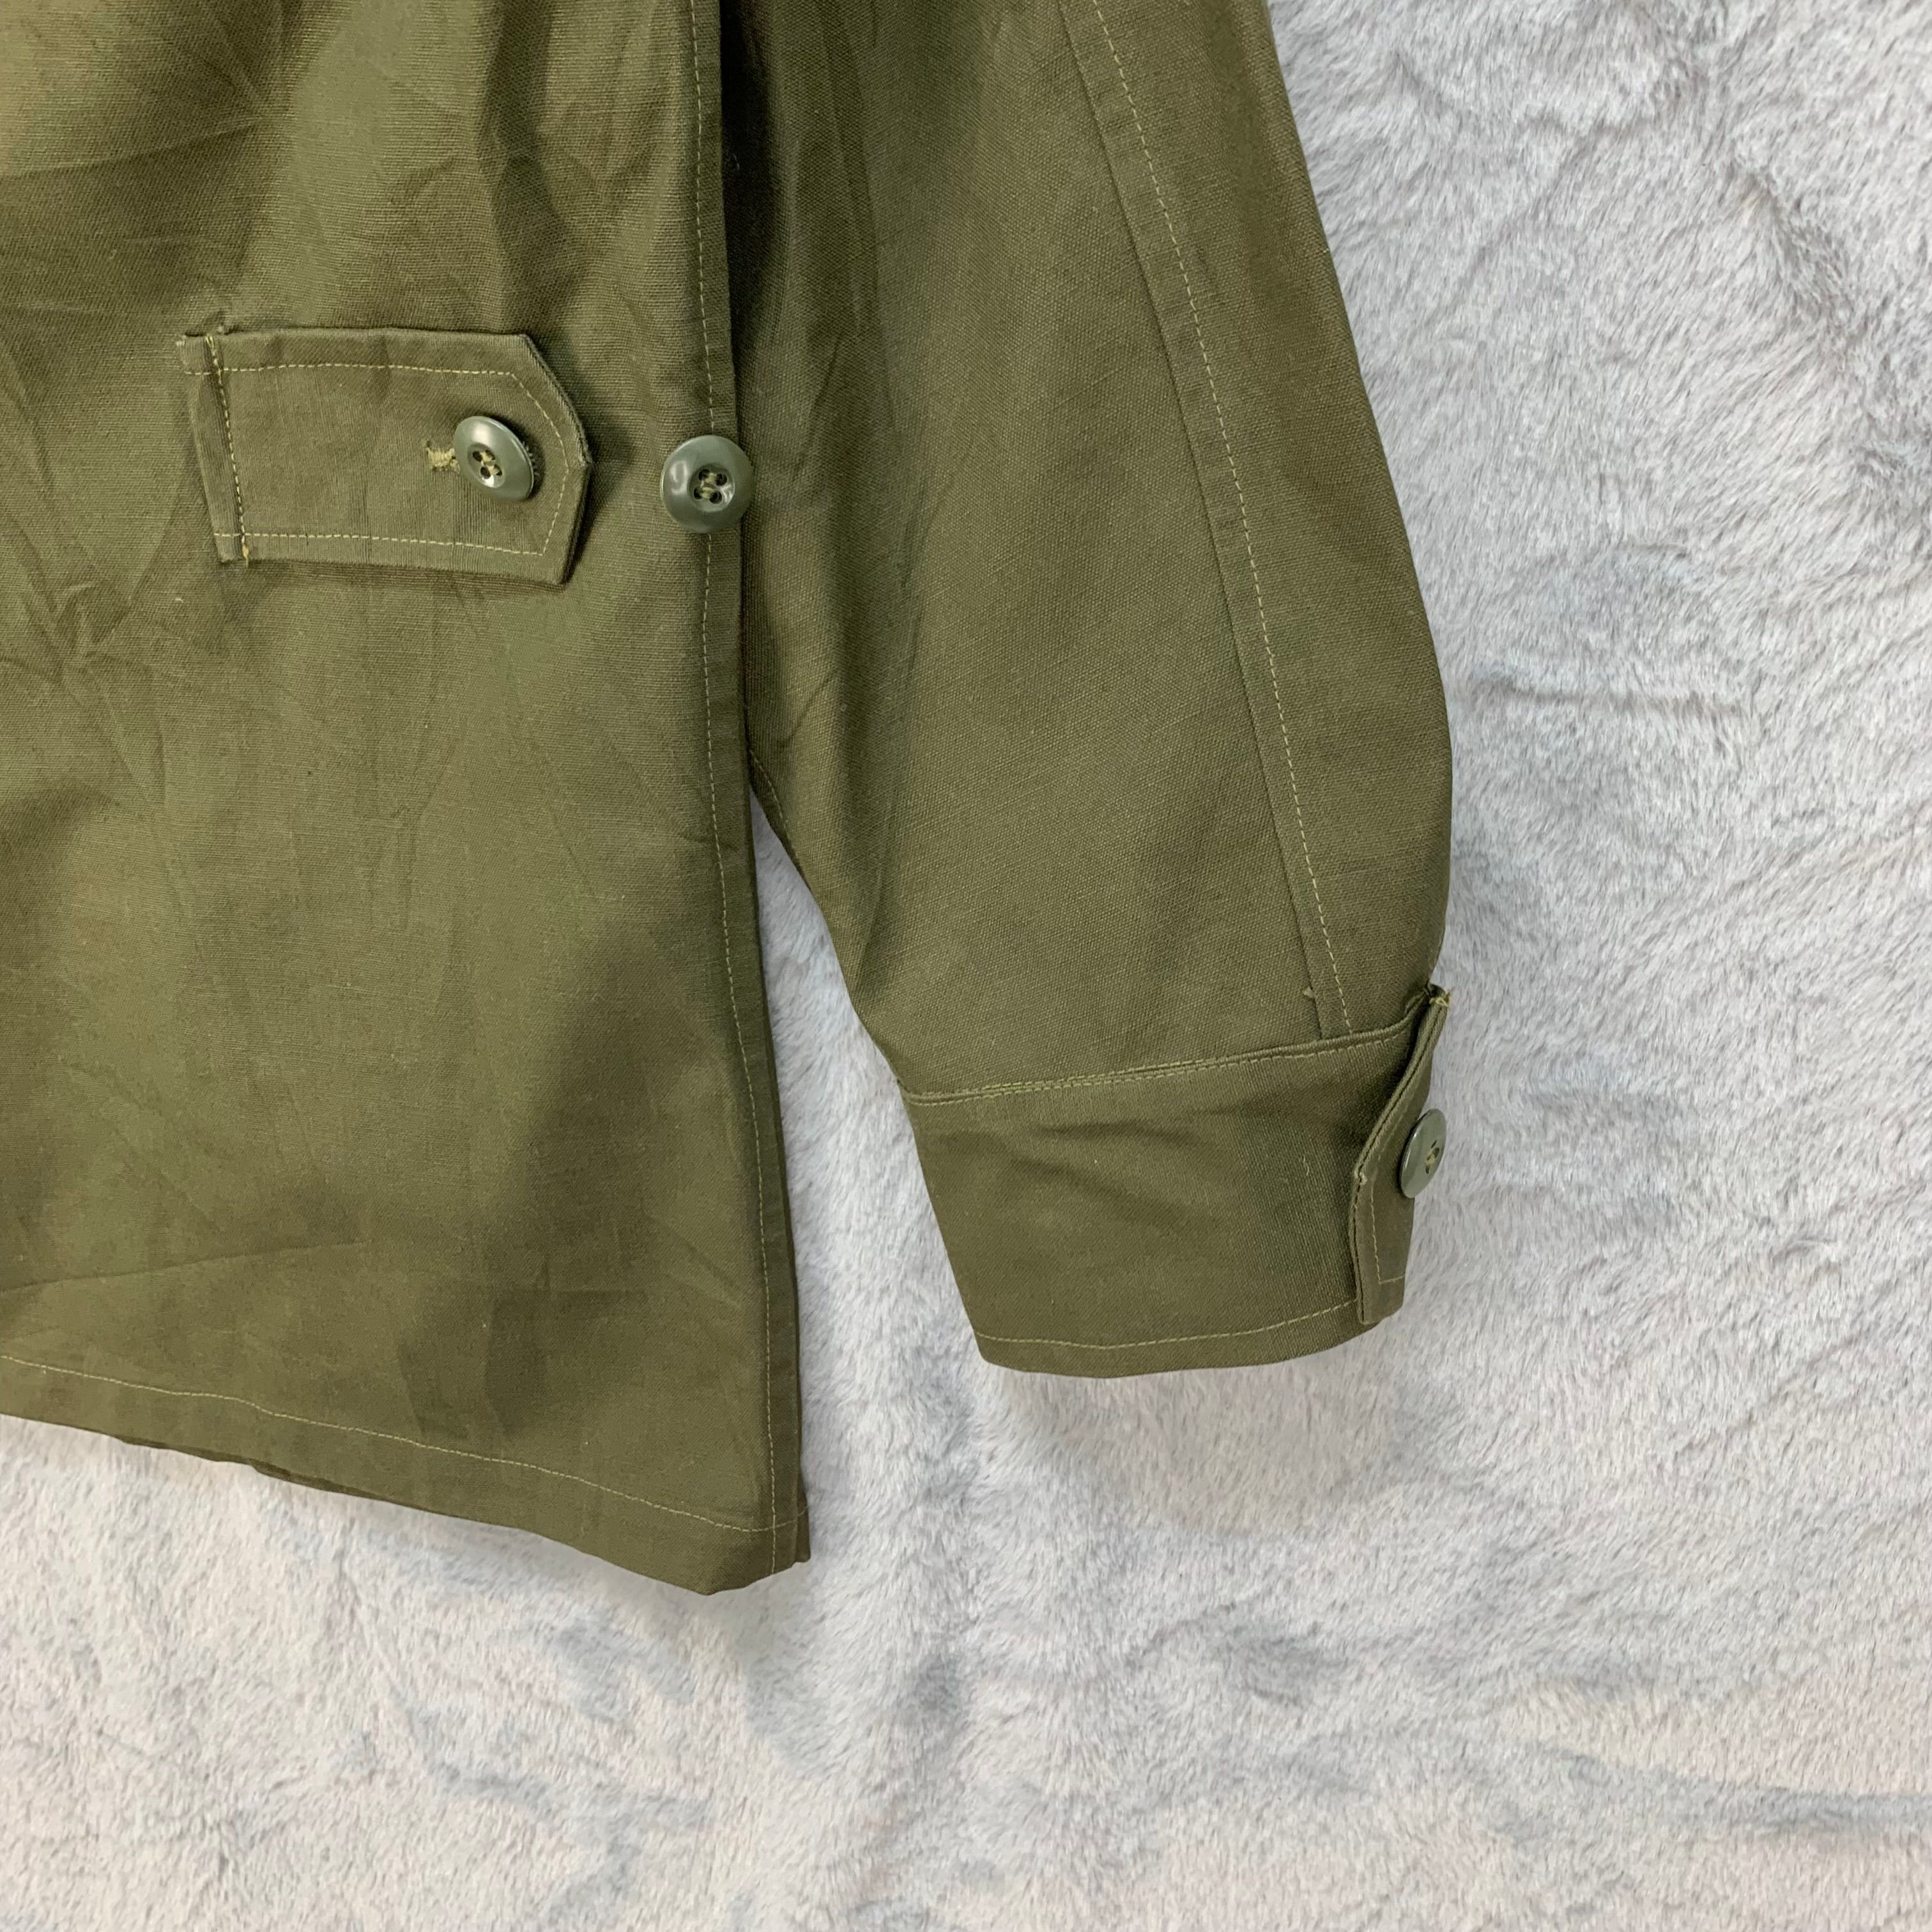 Vintage - Army Uniform Military Field Jacket / Chore Jacket #4400-152 - 11